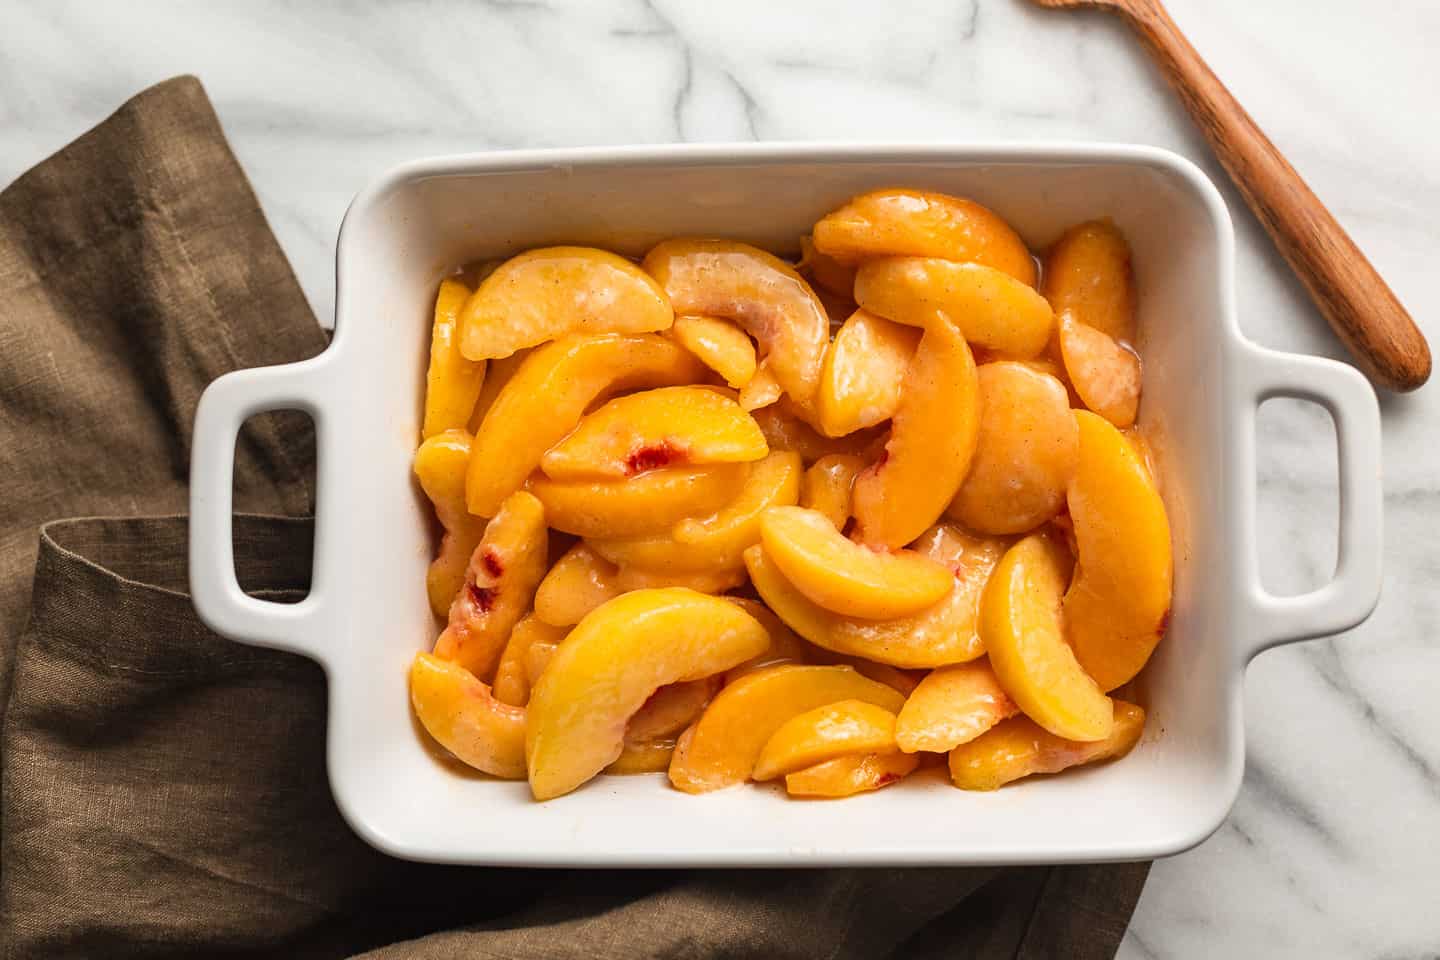 Peach crisp filling in a baking dish.